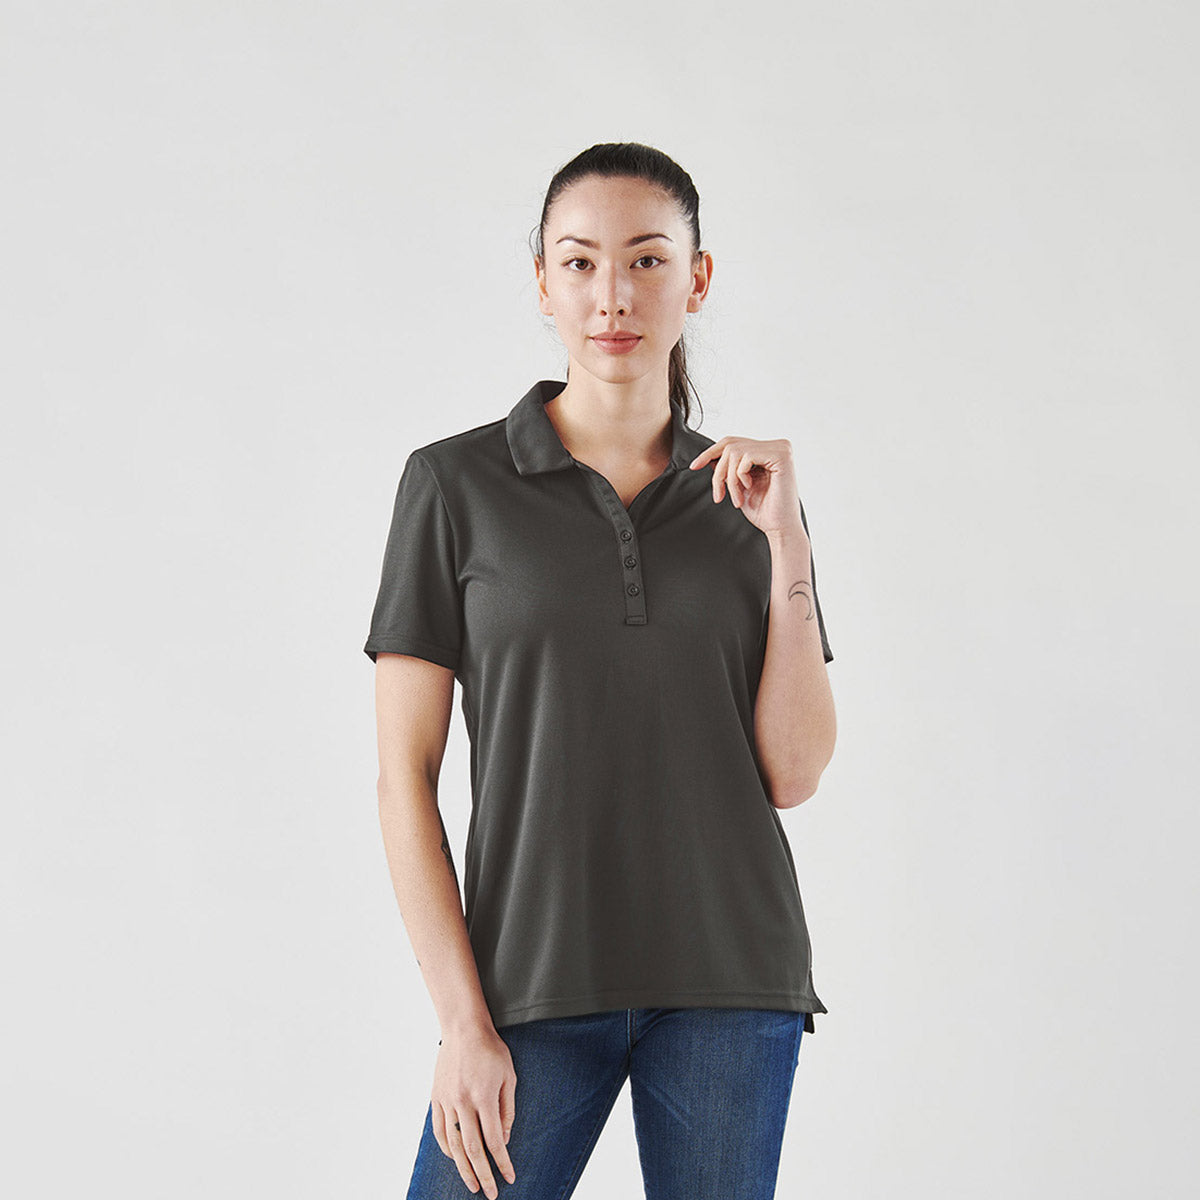 Women's Logan Thermal L/S Shirt - FLX-1W